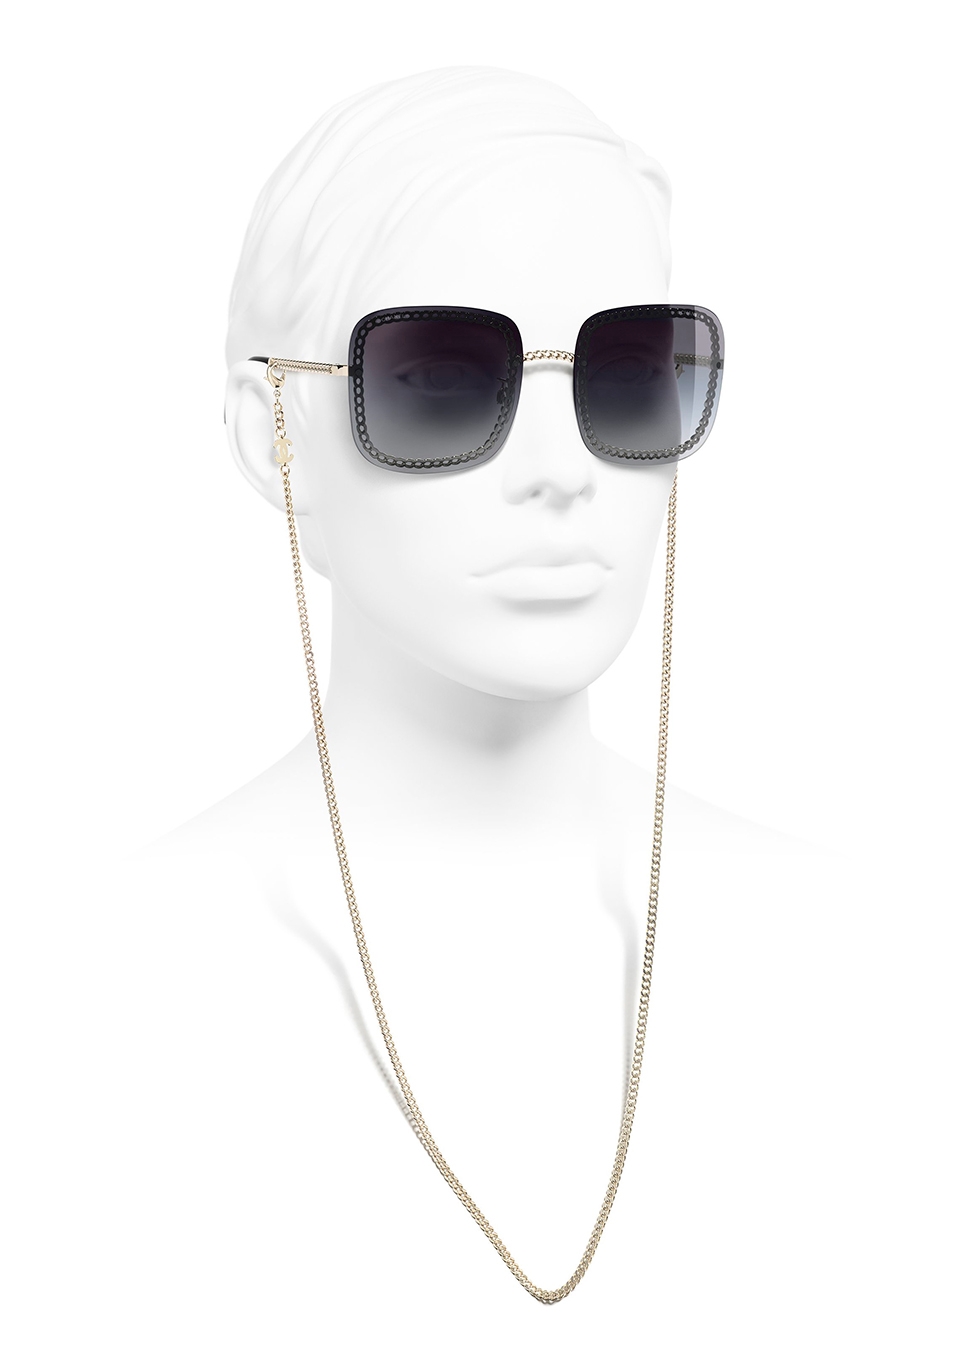 Chanel Pearl Chain Round Sunglasses Burgundy 4245 c1083M